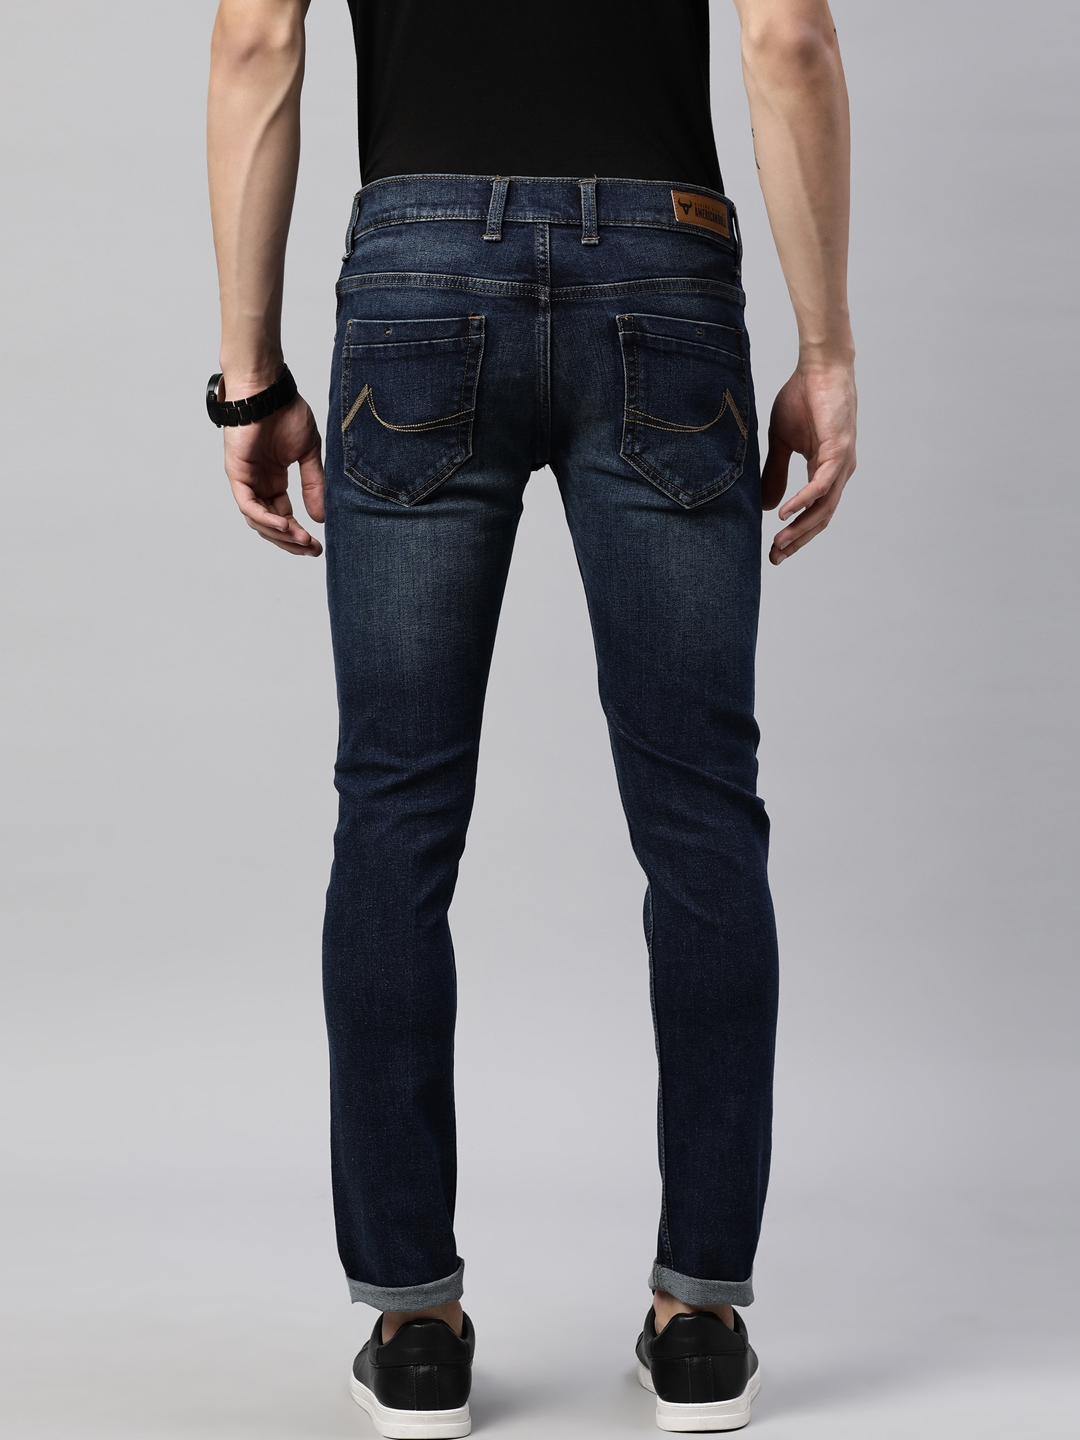 American Bull | American Bull Mens Denim Jeans With 5 Pockets 1